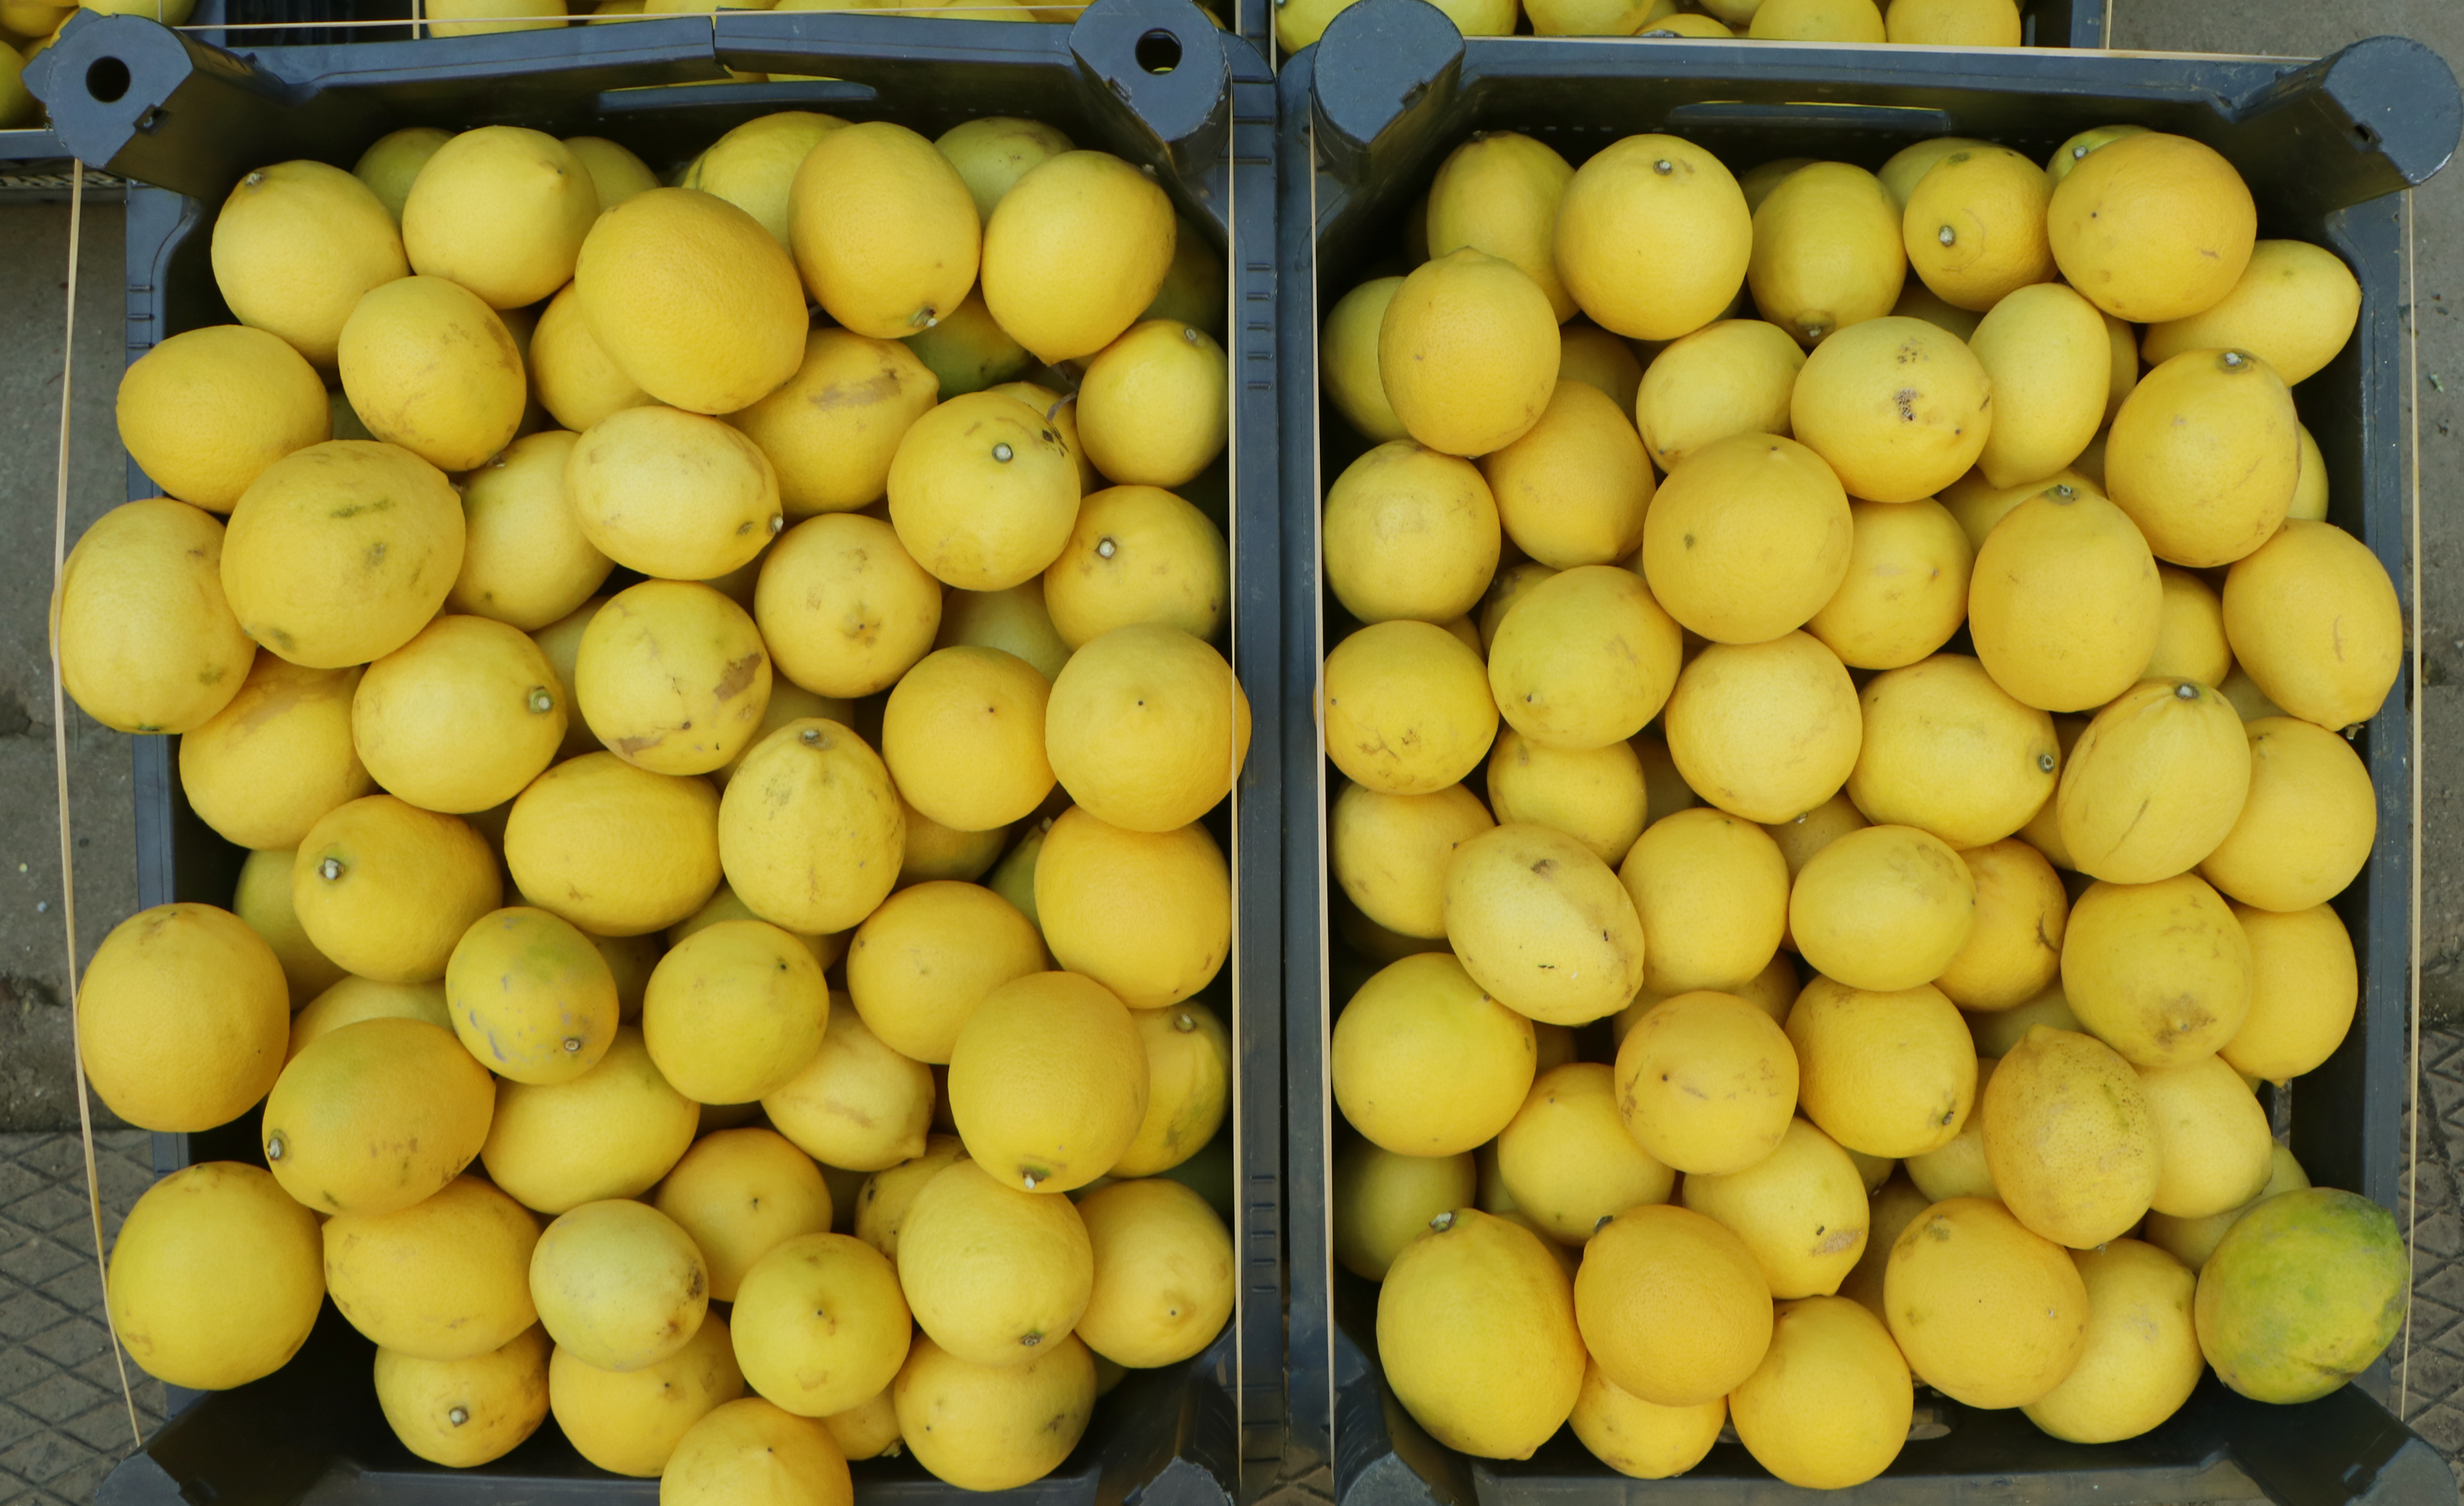 bahcede-kilosu-3-halde-4-liraya-satilan-limon-market-rafinda-24-lira_6918_dhaphoto5